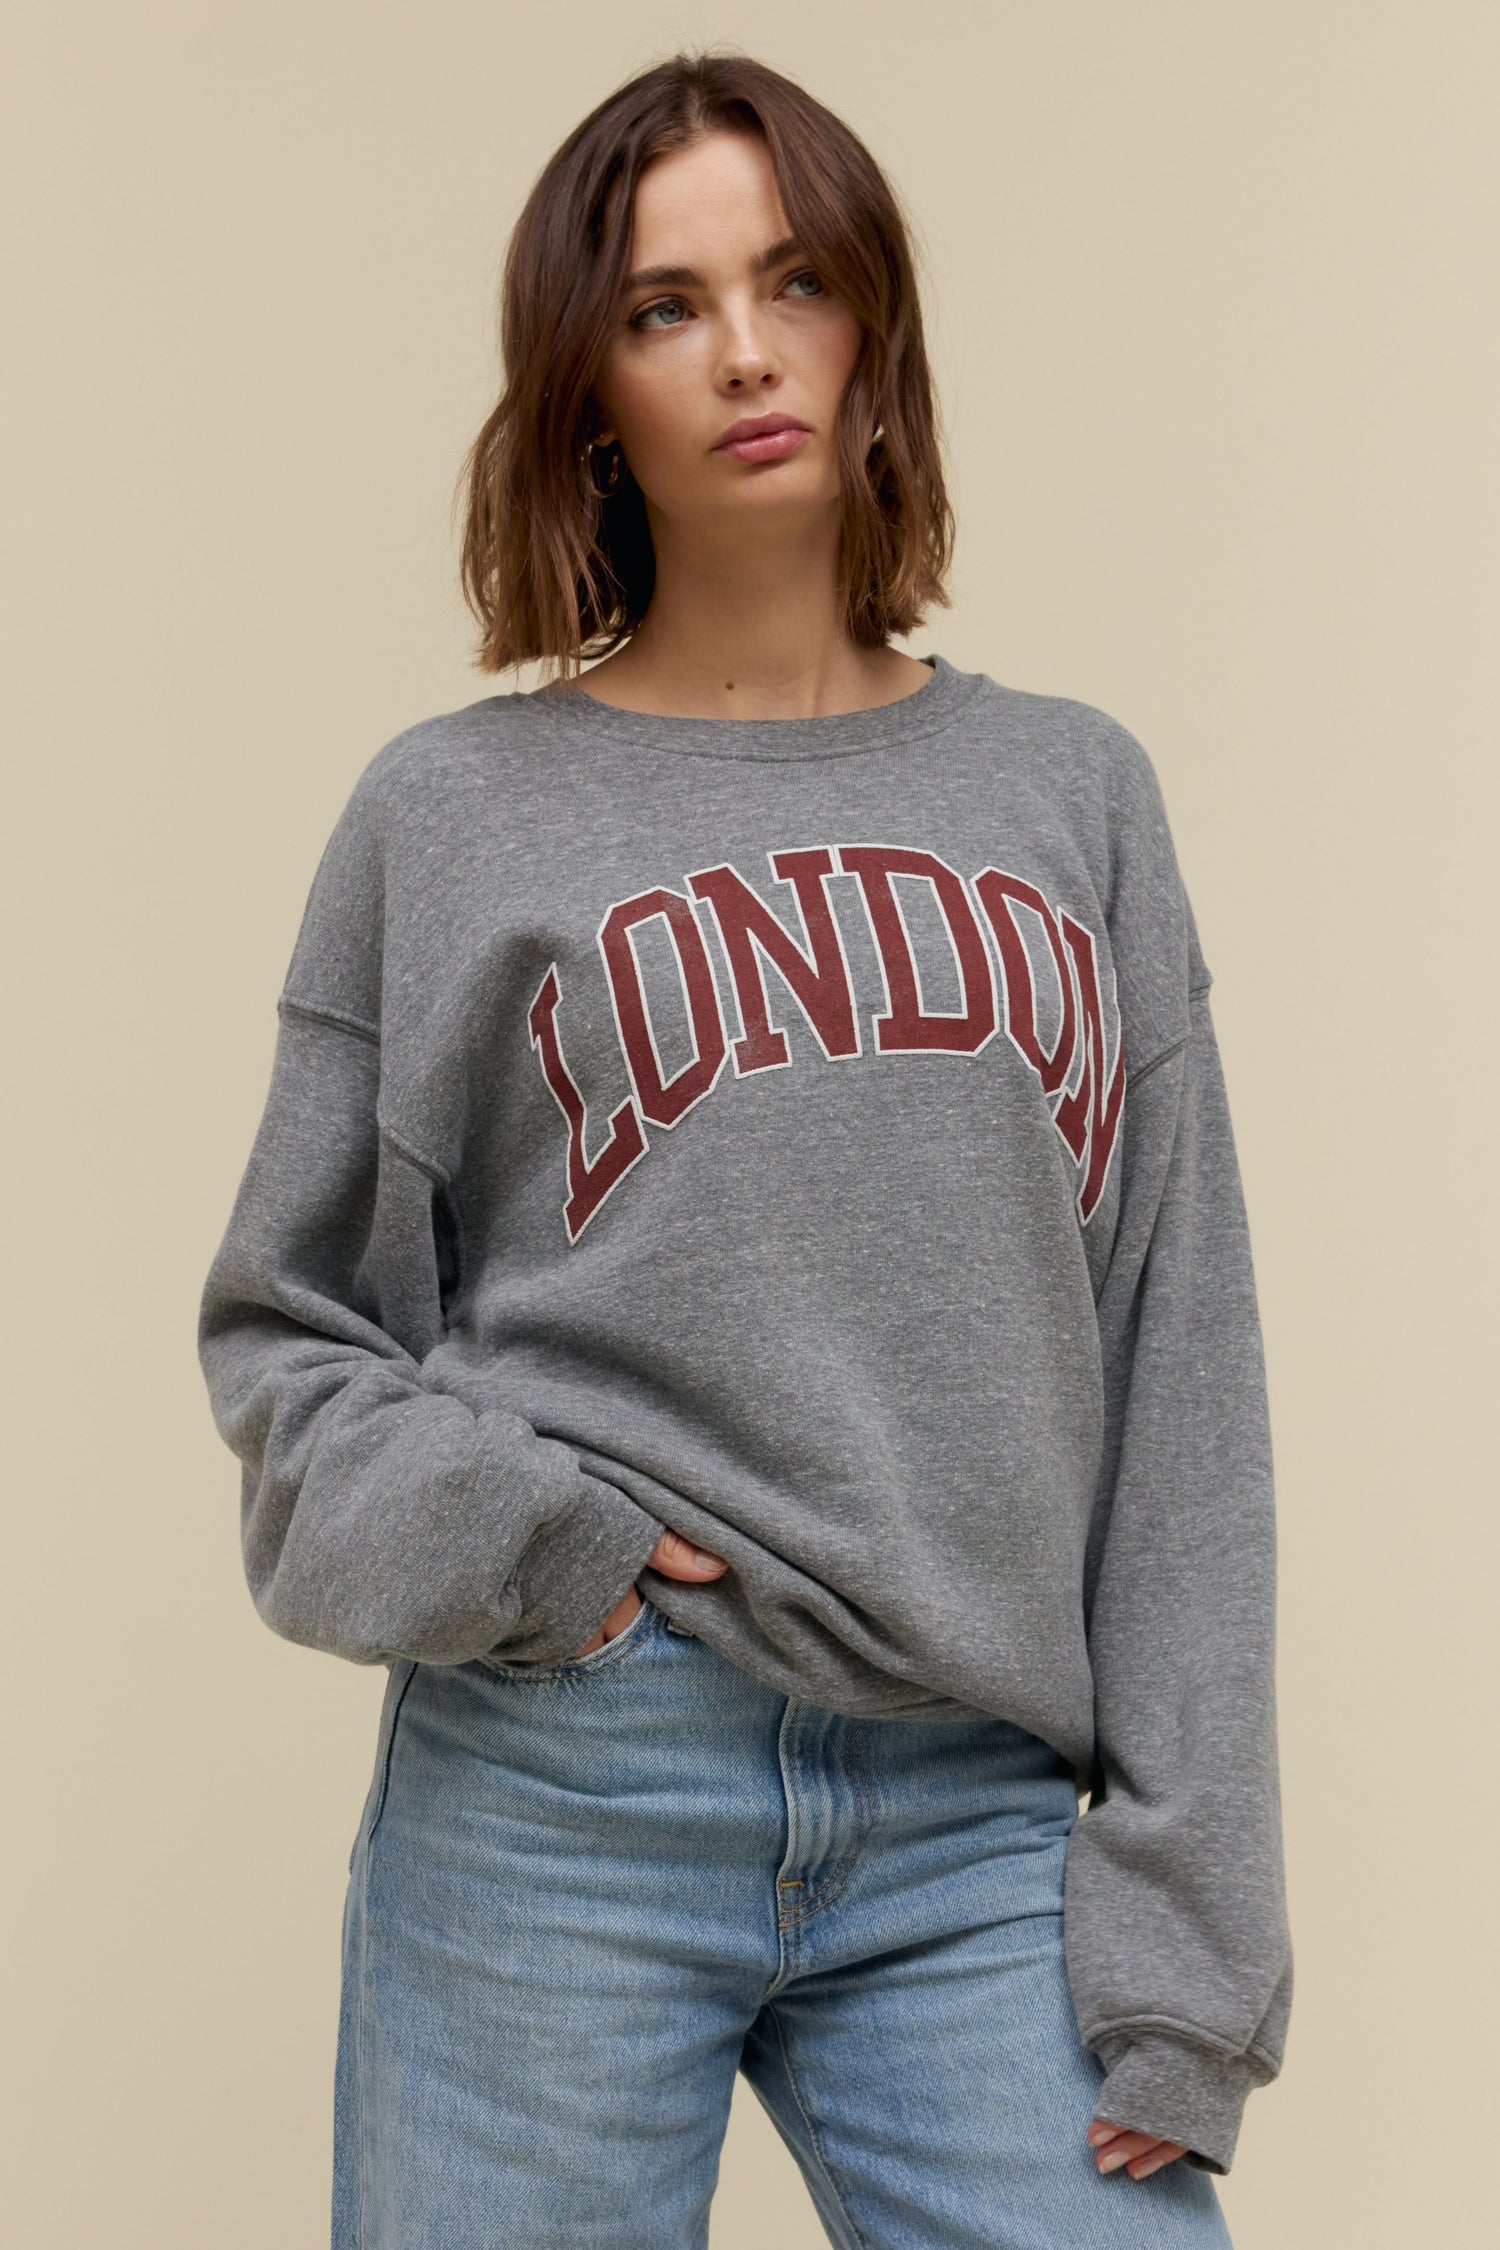 Short-haired model wearing an oversized tri-blend fleece sweatshirt in heather grey with contrast maroon 'London' collegiate style lettering